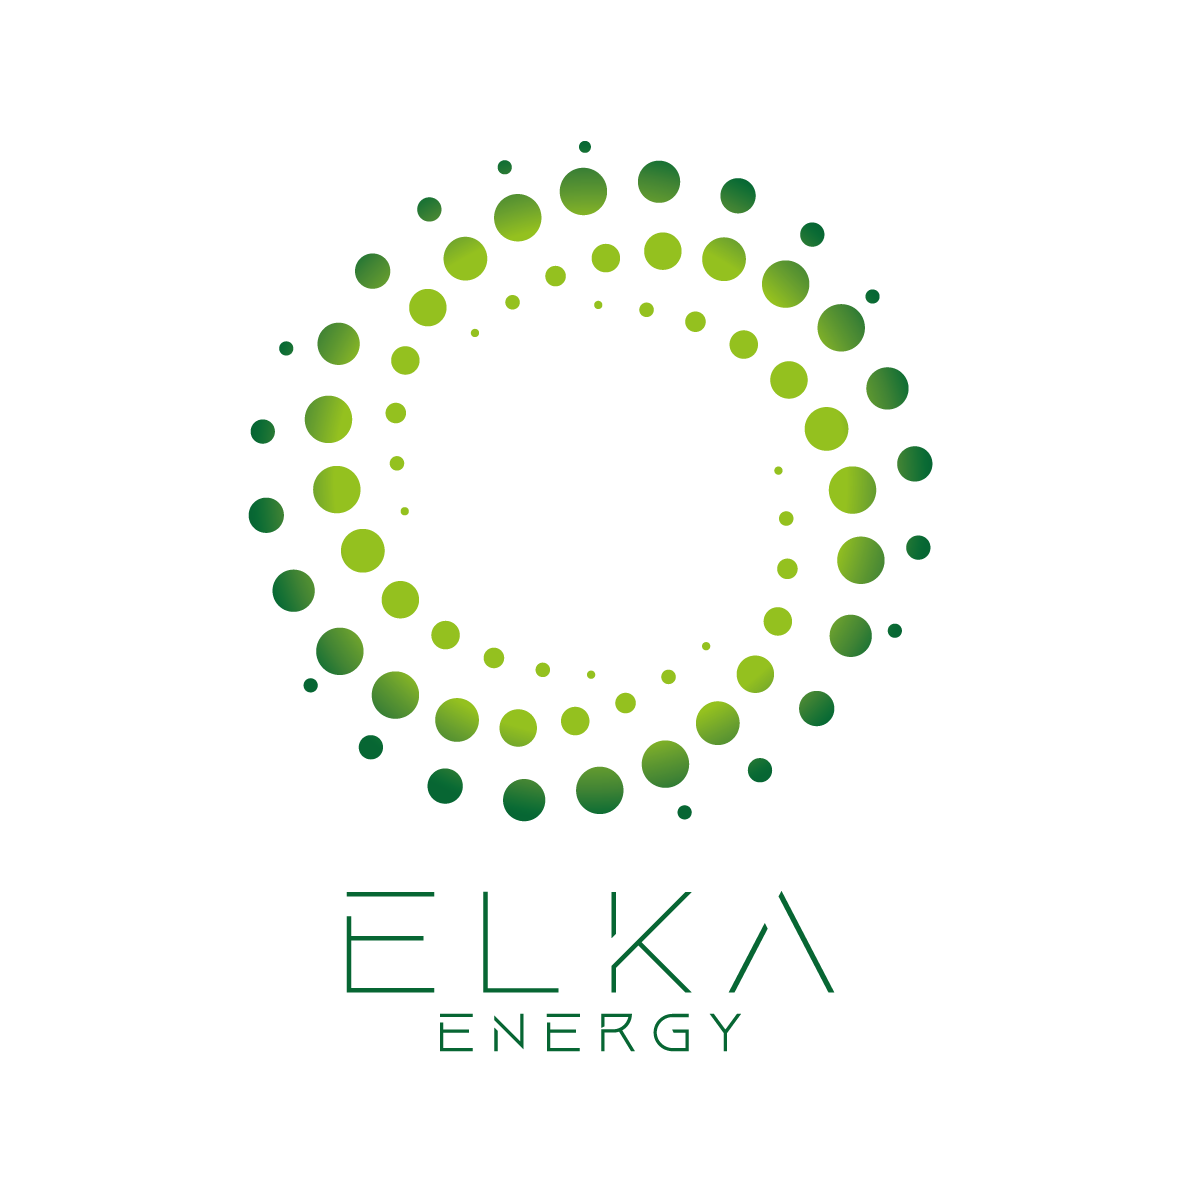 ELKA Energy